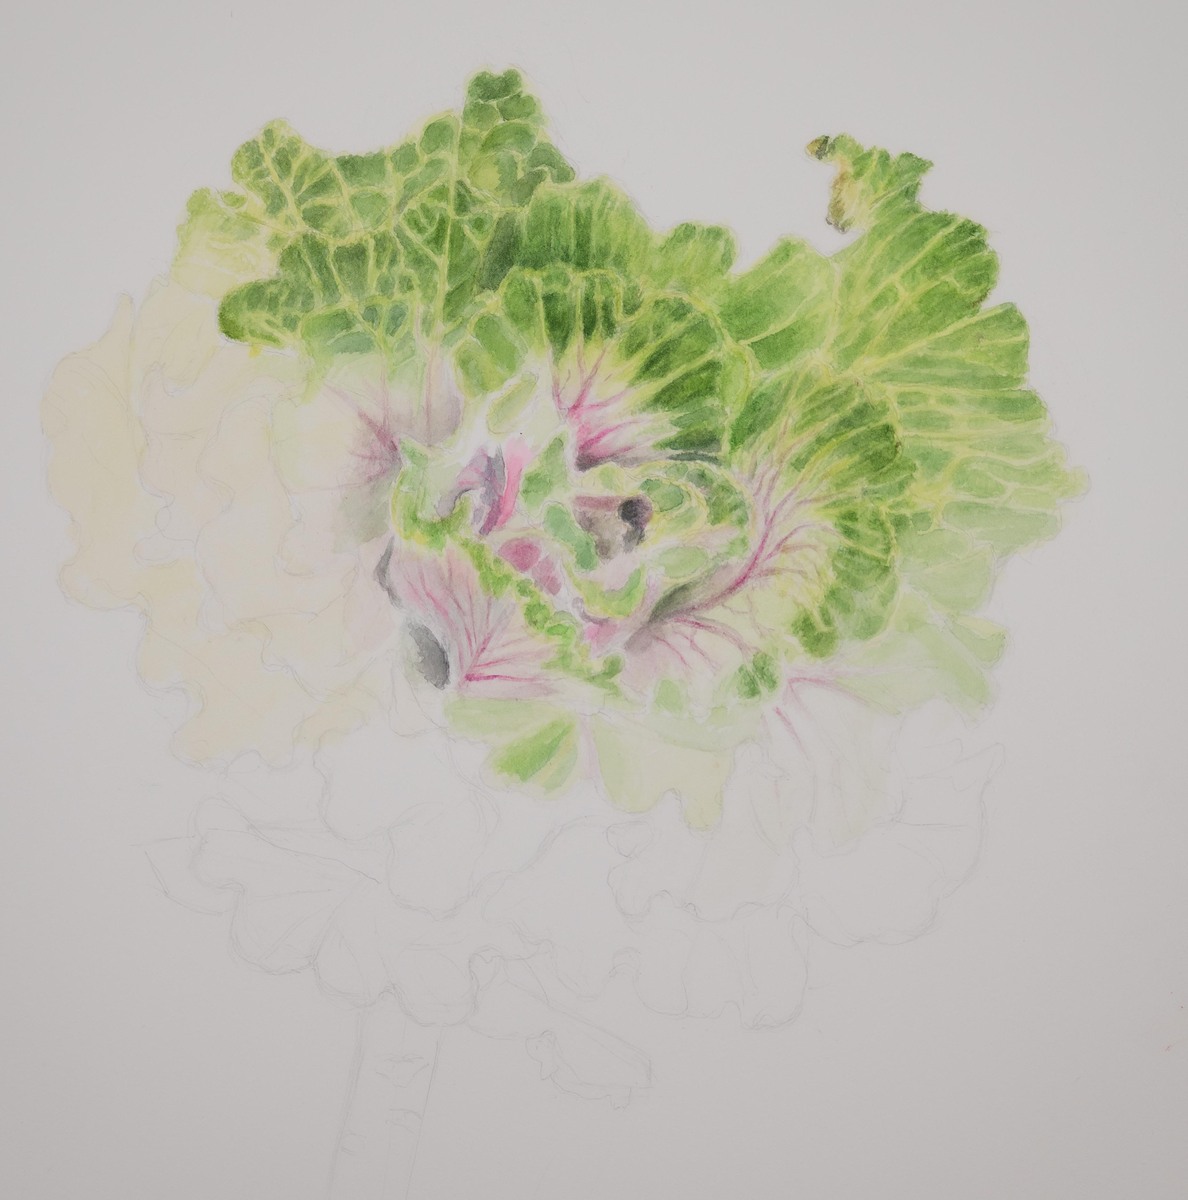 Decorative Kale  12" X 16"  Watercolor on Hot Press Watercolor Paper